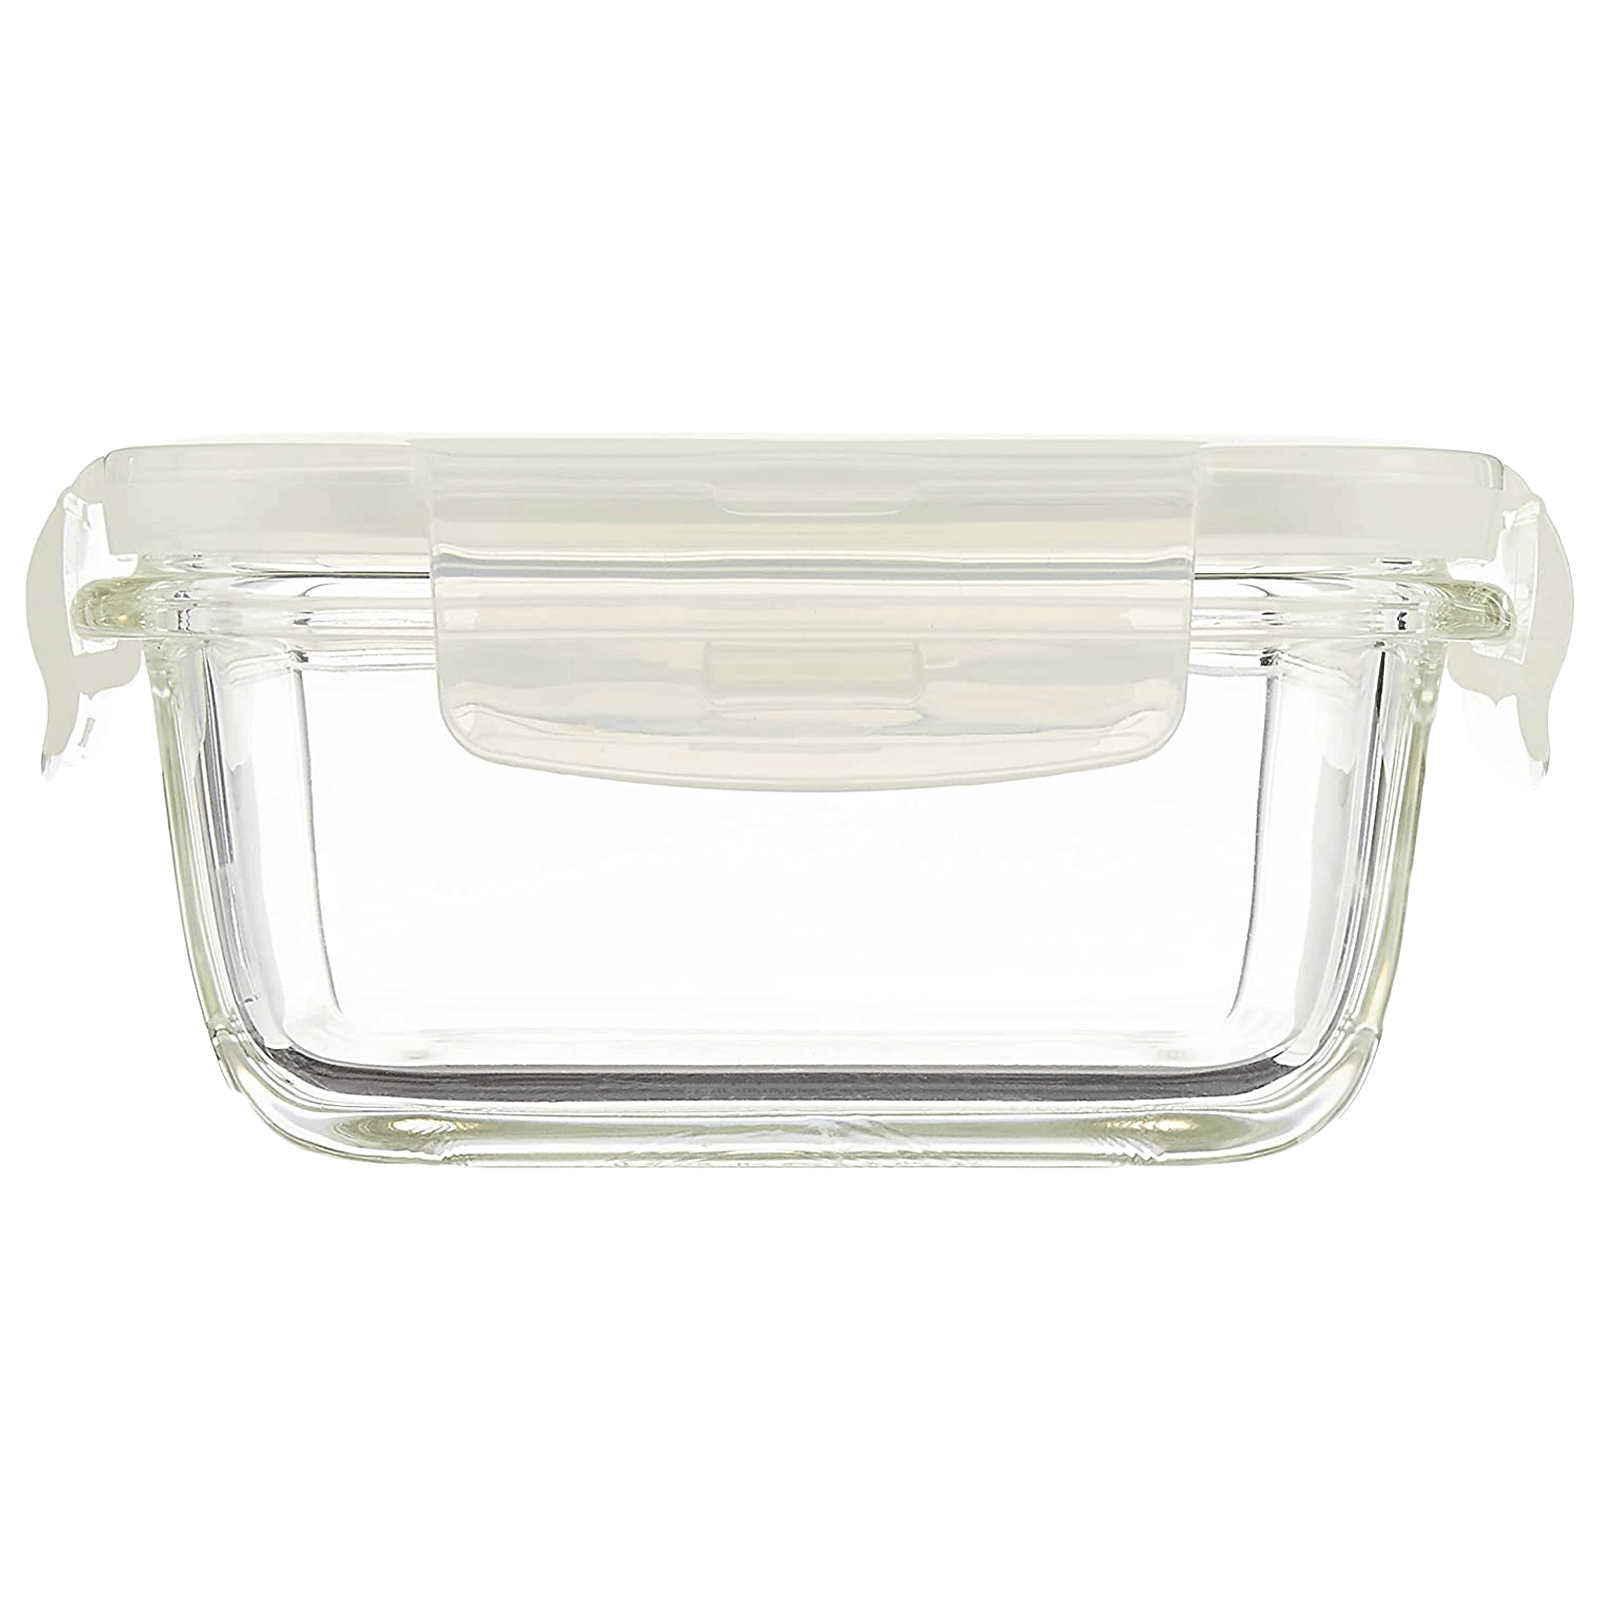 Lock & Lock 300 ml Square Glass Storage Container (Heat Resistant, LLG203, Transparent)_1